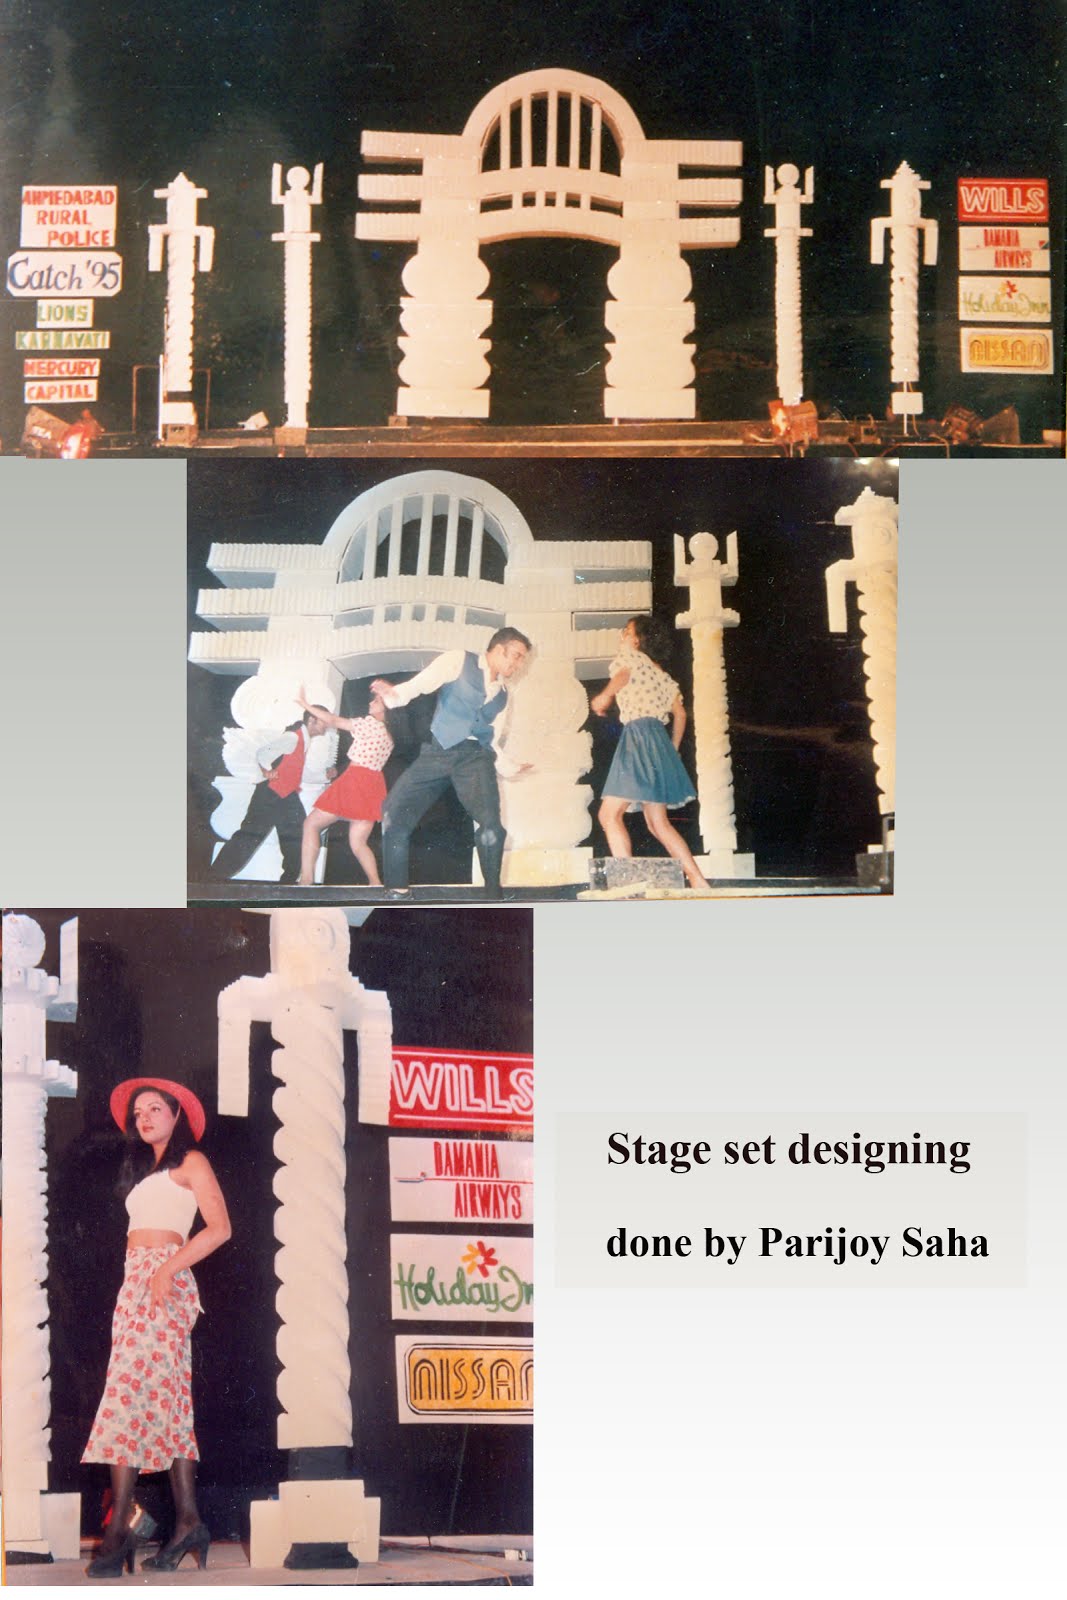 Stage set designing done by Parijoy Saha.